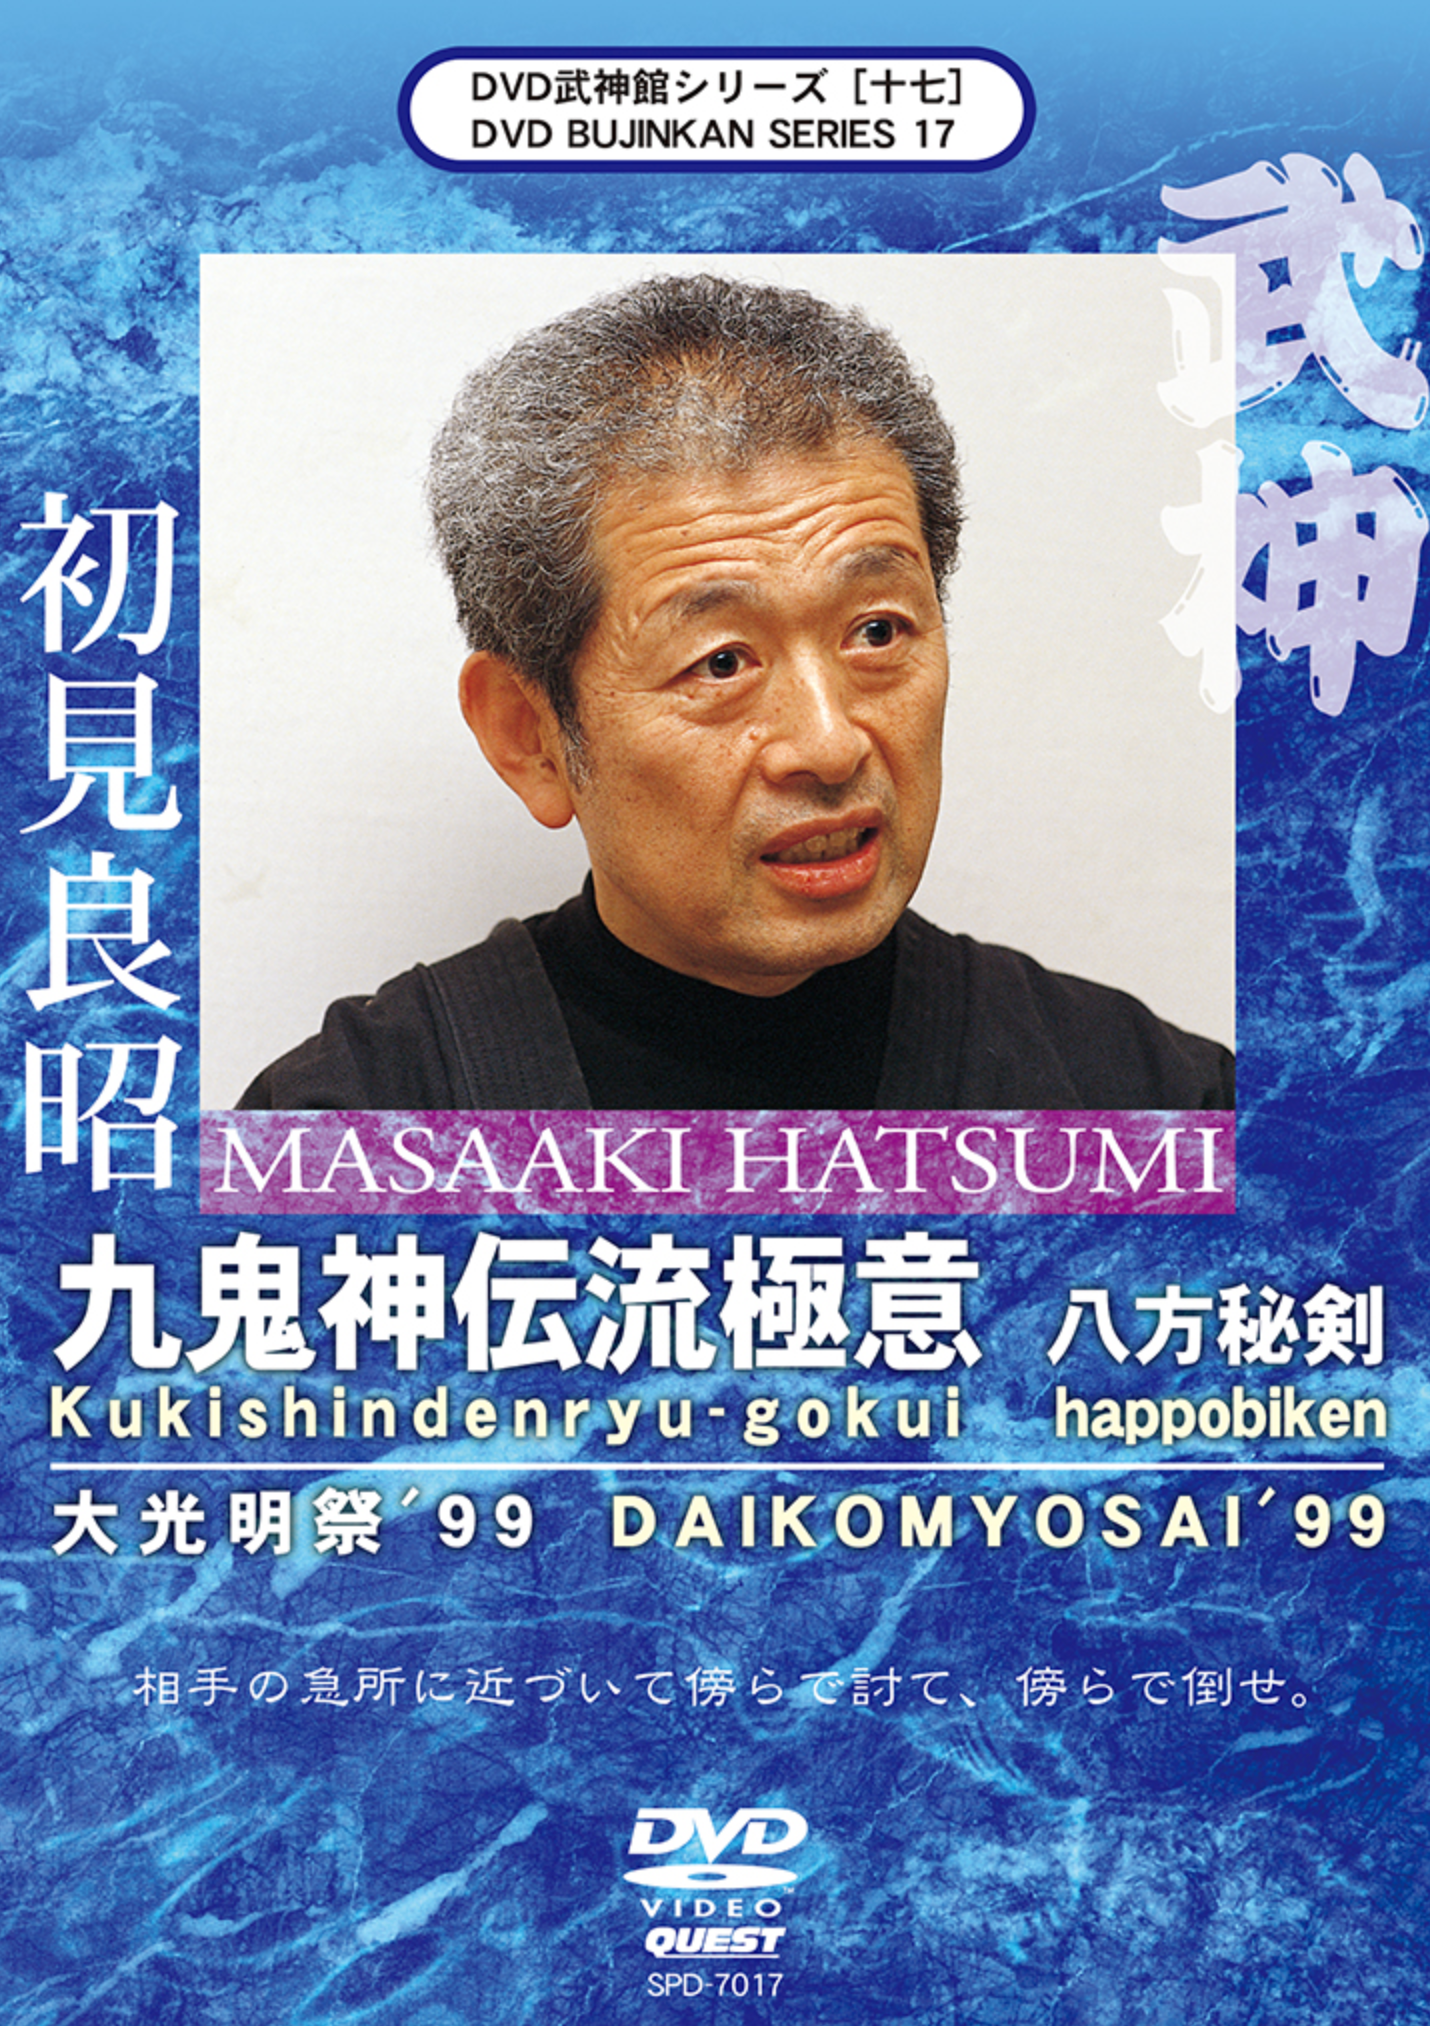 Bujinkan DVD Series 17: Kukushinden Ryu Gokui Happobiken with Masaaki Hatsumi - Budovideos Inc